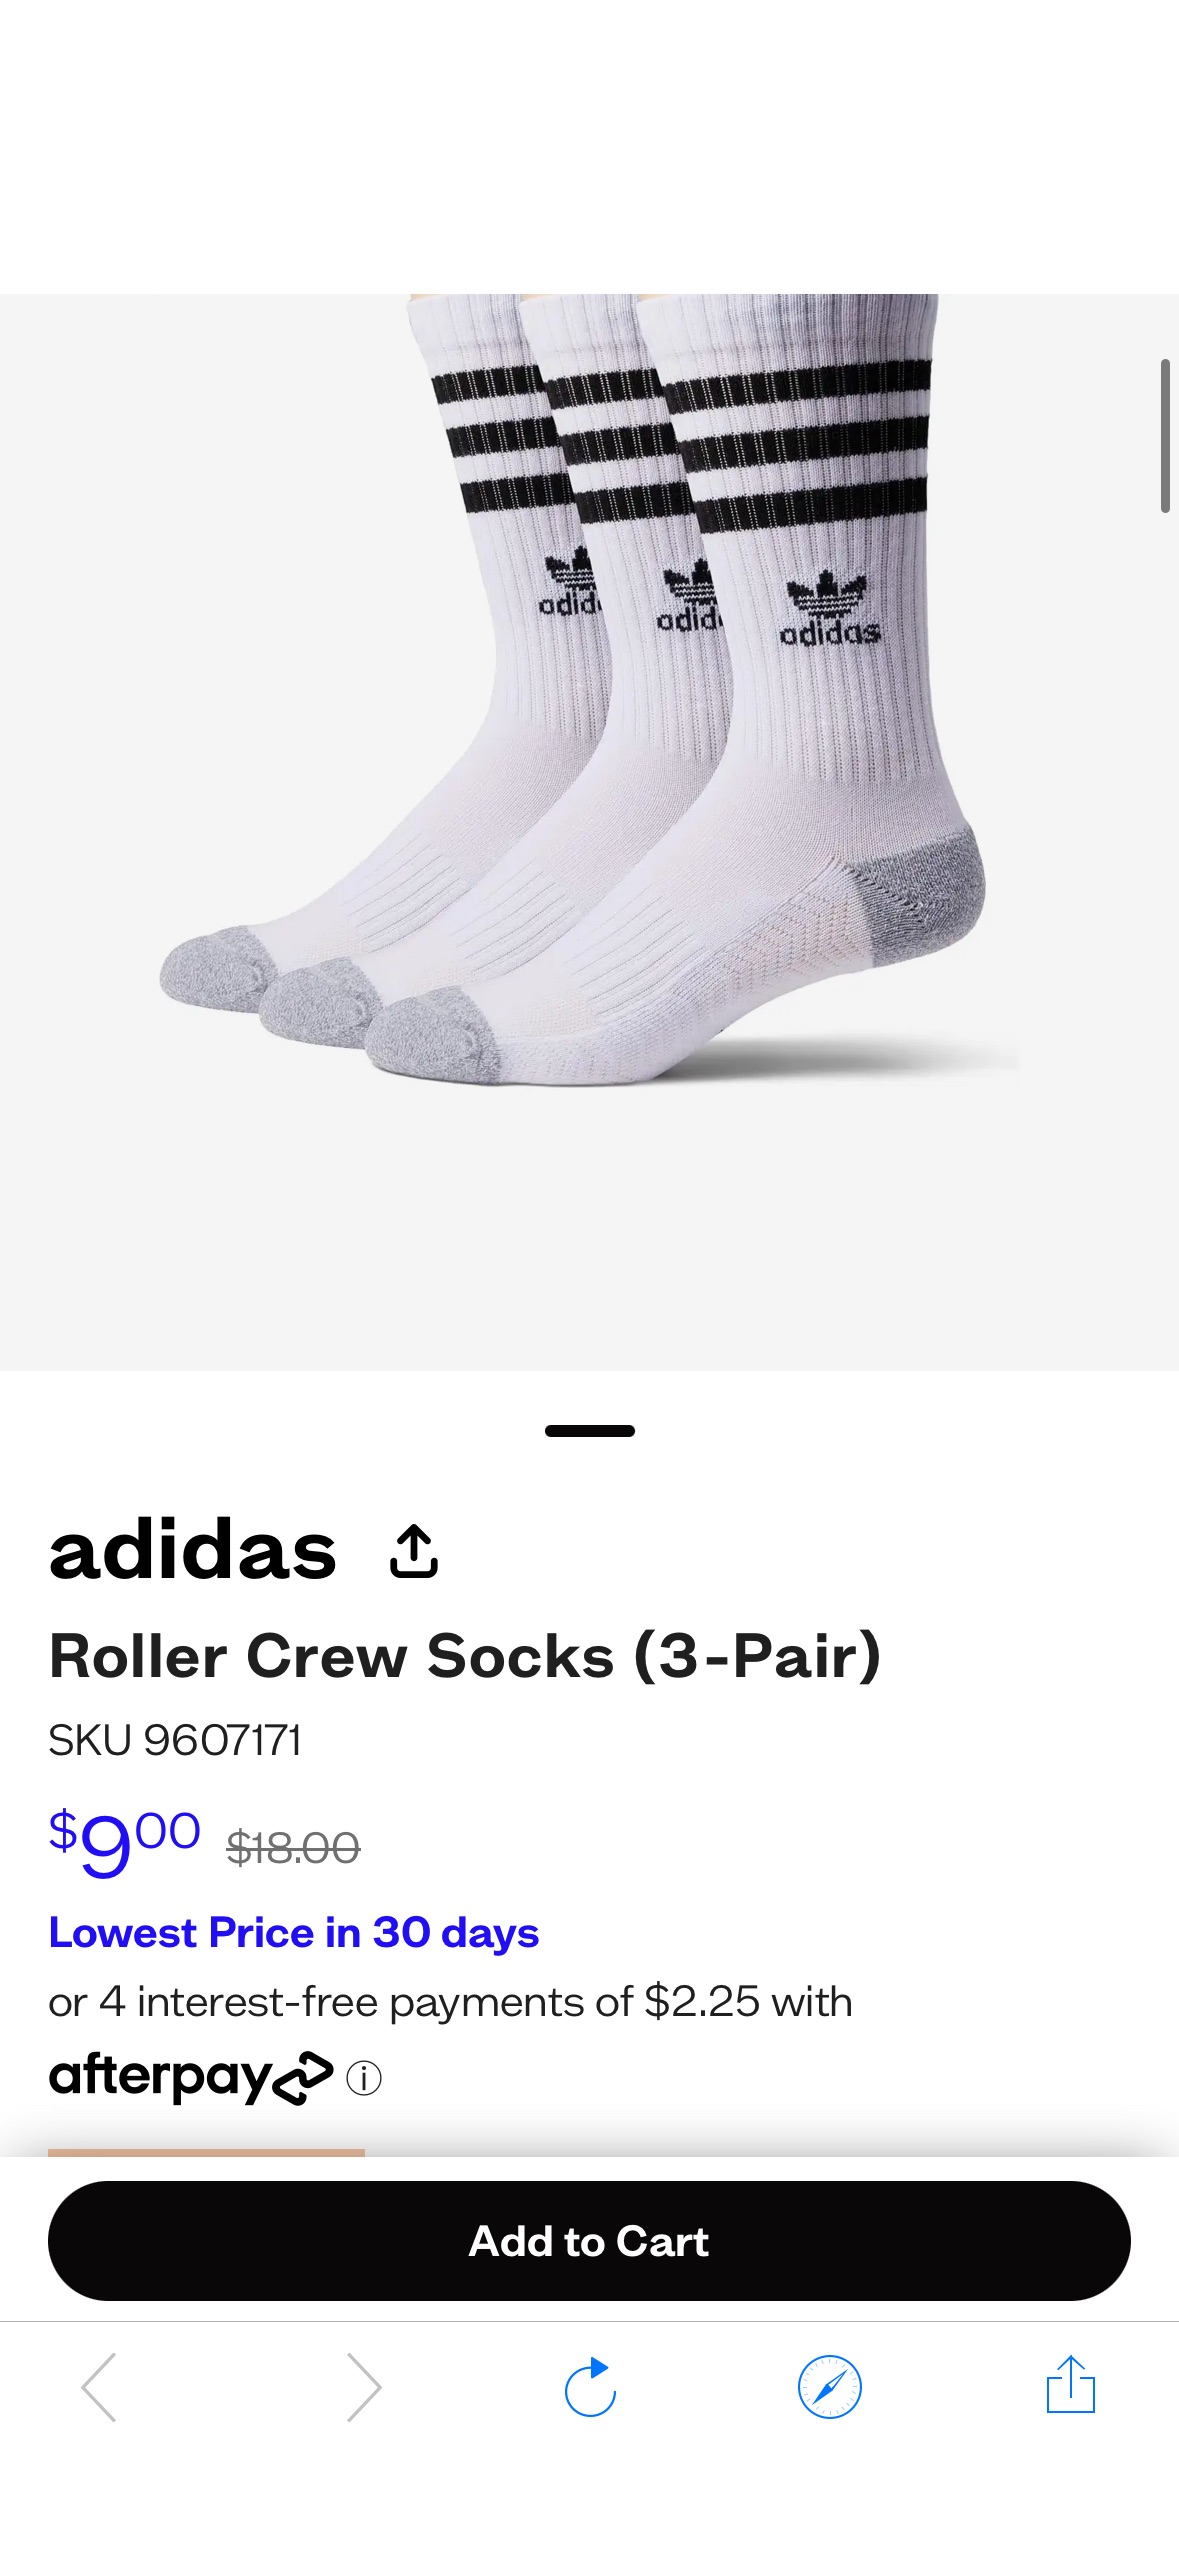 adidas Roller Crew Socks (3-Pair) | Zappos.com